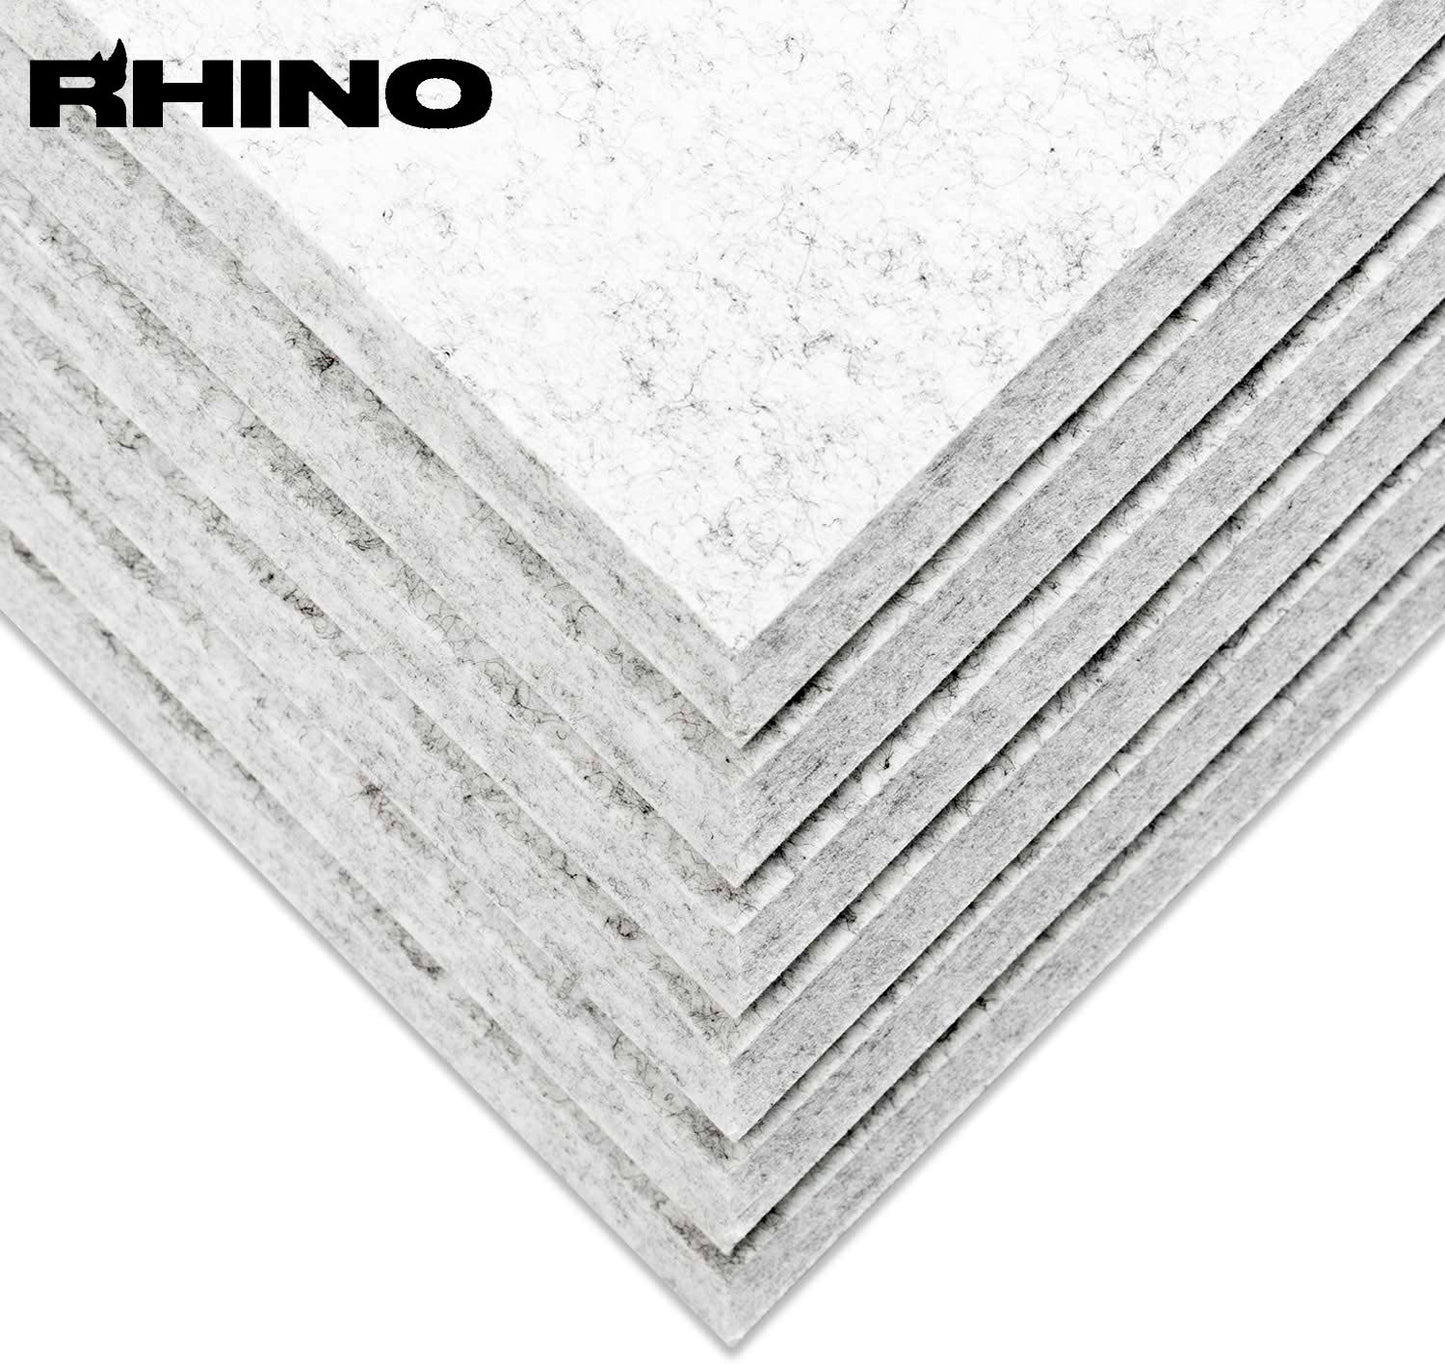 16" x 12" RHINO Acoustic Panels Silver Gray Color (6 Pcs)